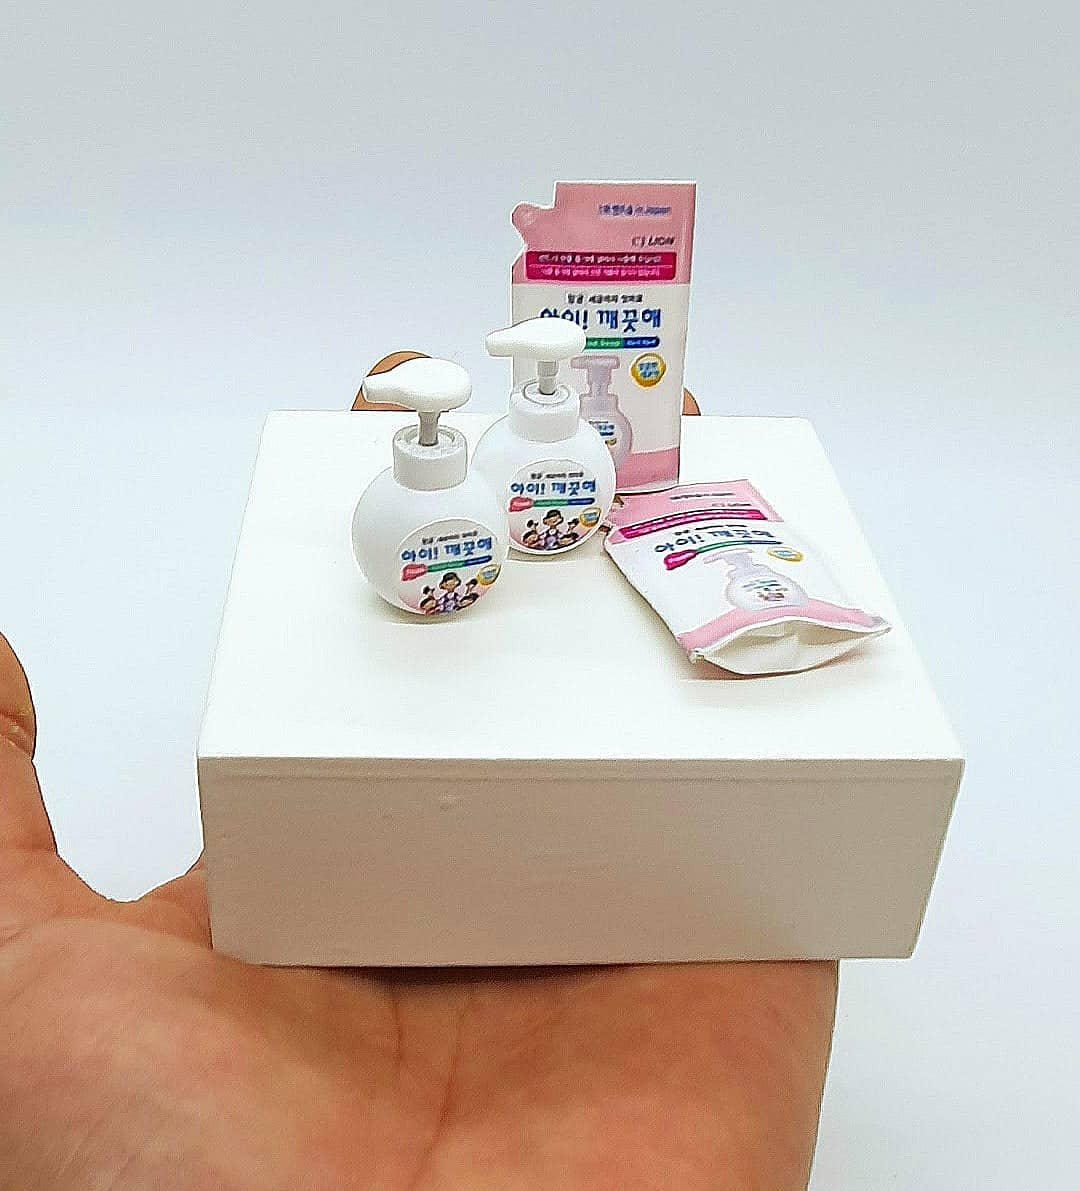 6 sculpture miniature hand sanitizer sunny miniworld